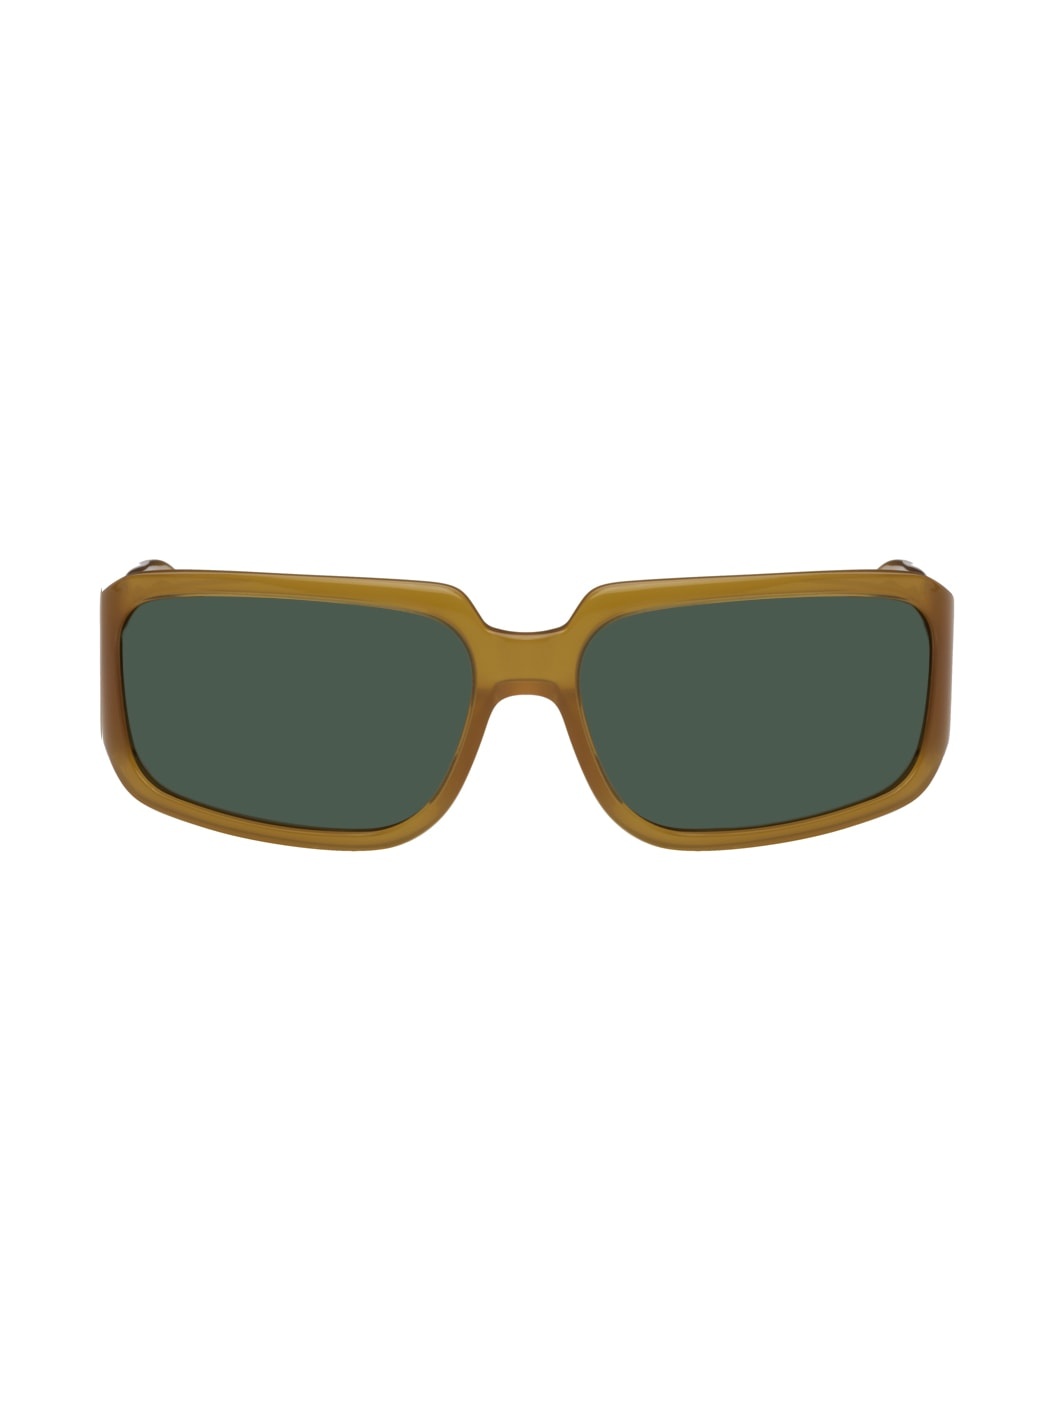 Orange Linda Farrow Edition Square Sunglasses - 1